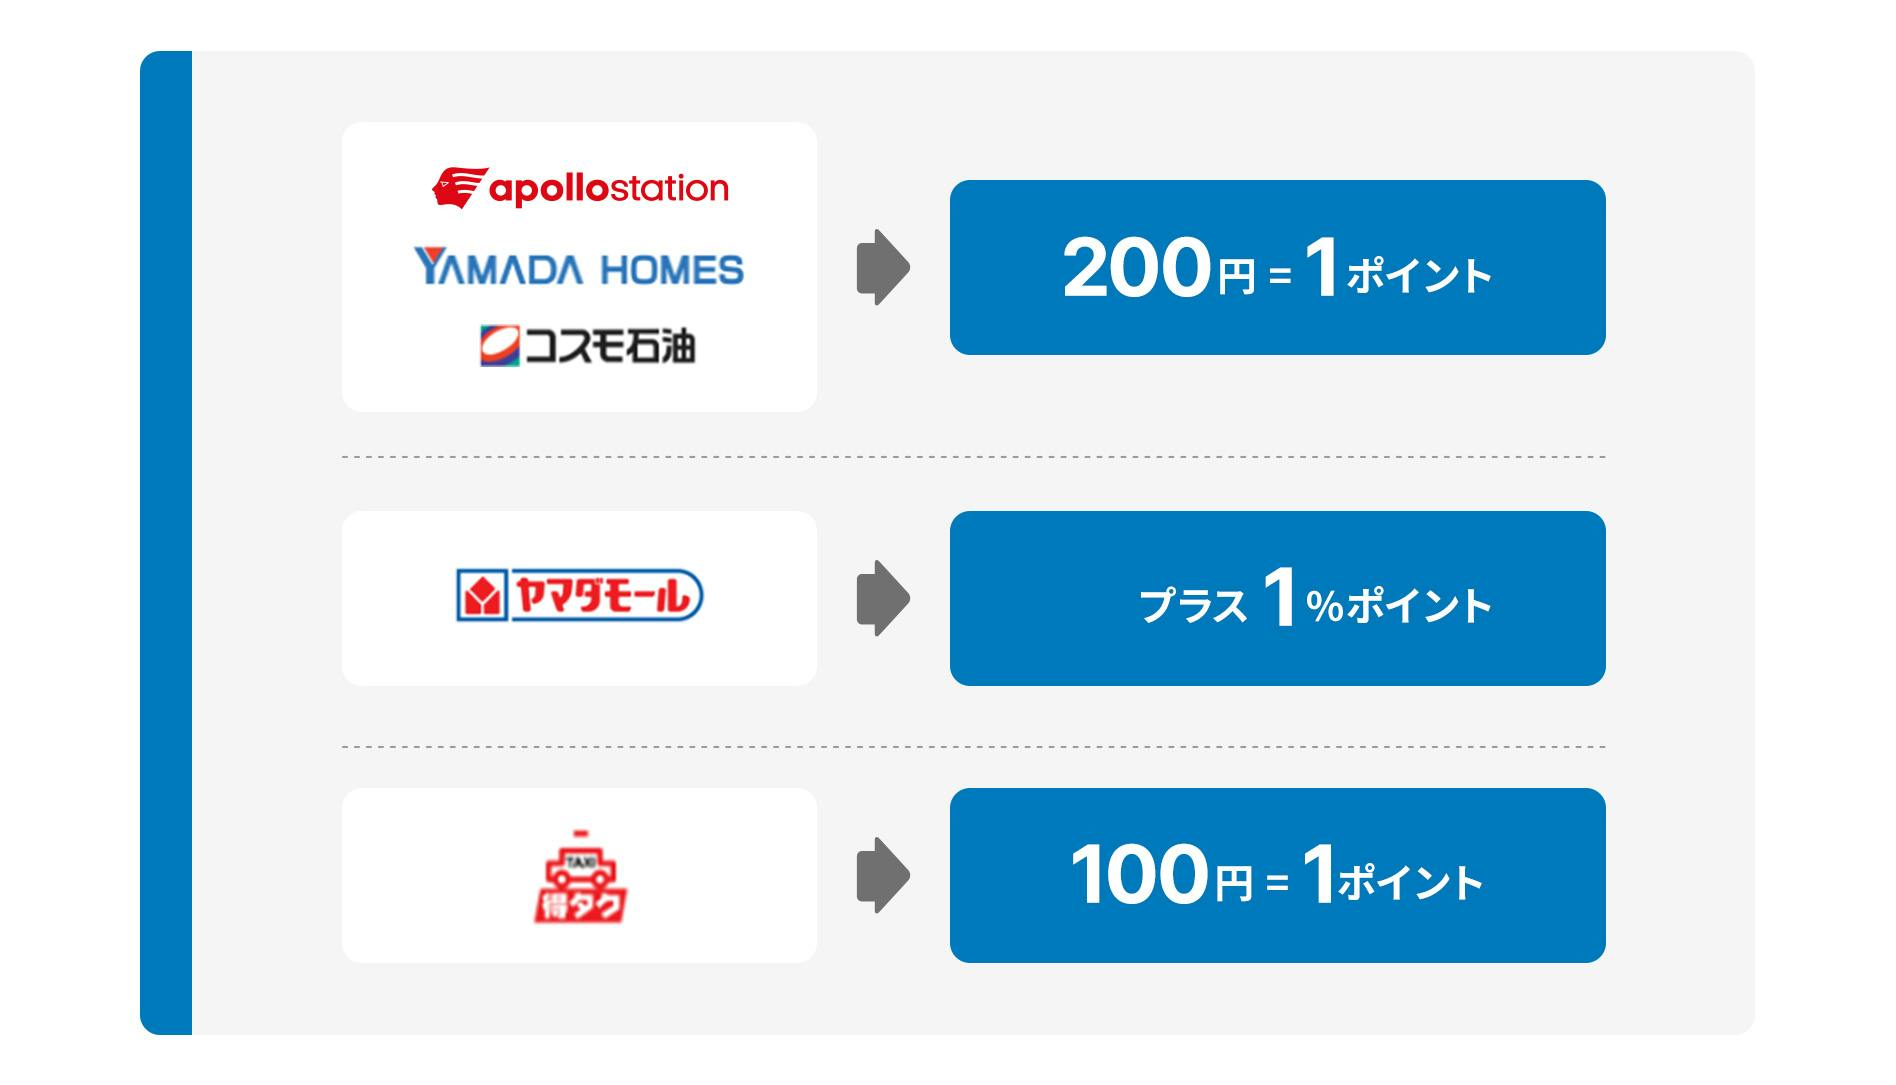 IDEMITSU、YAMADA HOMES、コスモ石油は200円＝1ポイント　ヤマダモールはプラス1%ポイント　特タクは100円＝1ポイント